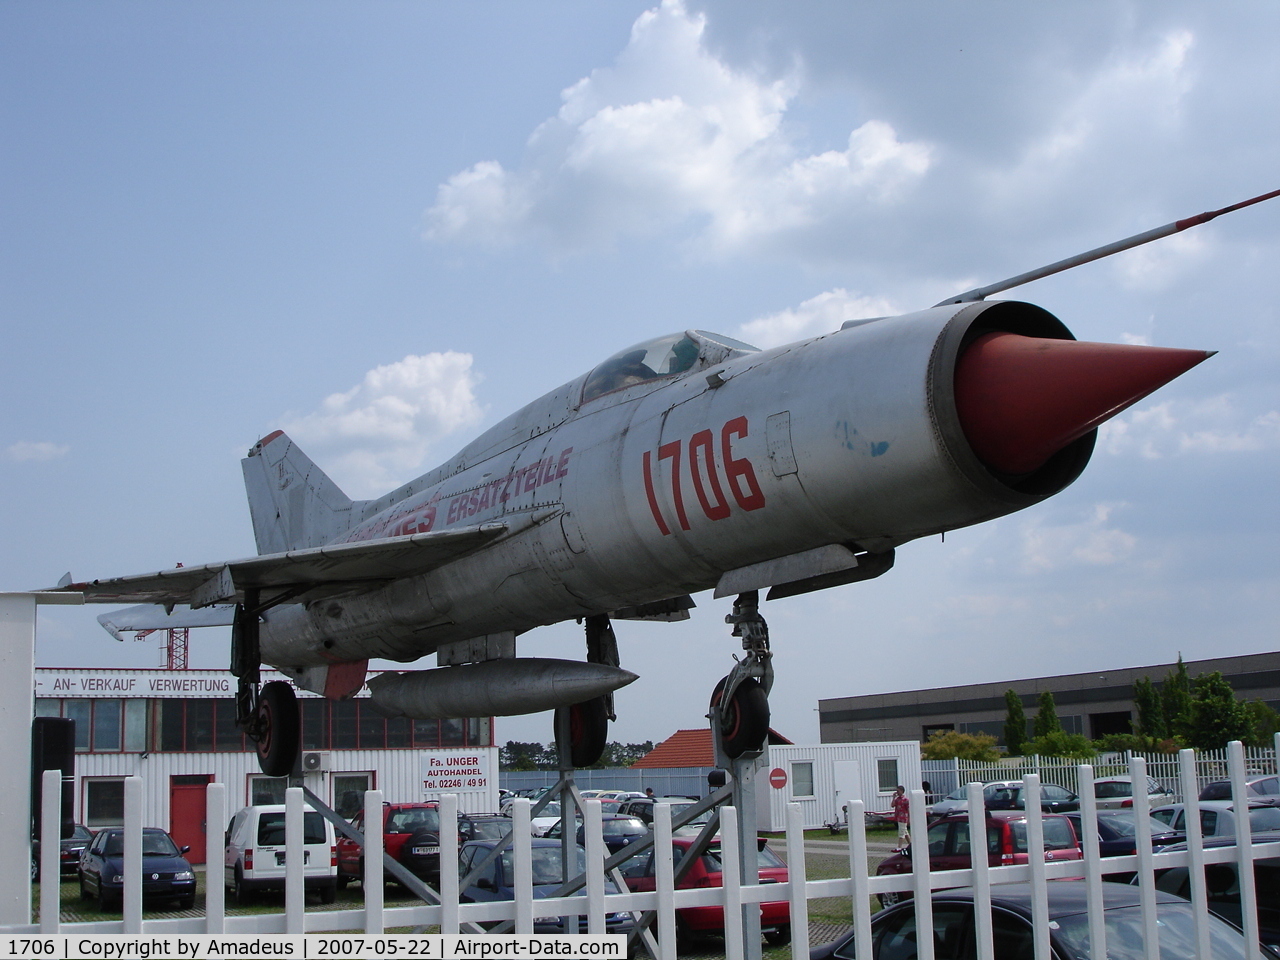 1706, Mikoyan-Gurevich MiG-21PF C/N 761706, Mig-21 used as advertising space in Gerasdorf near Vienna